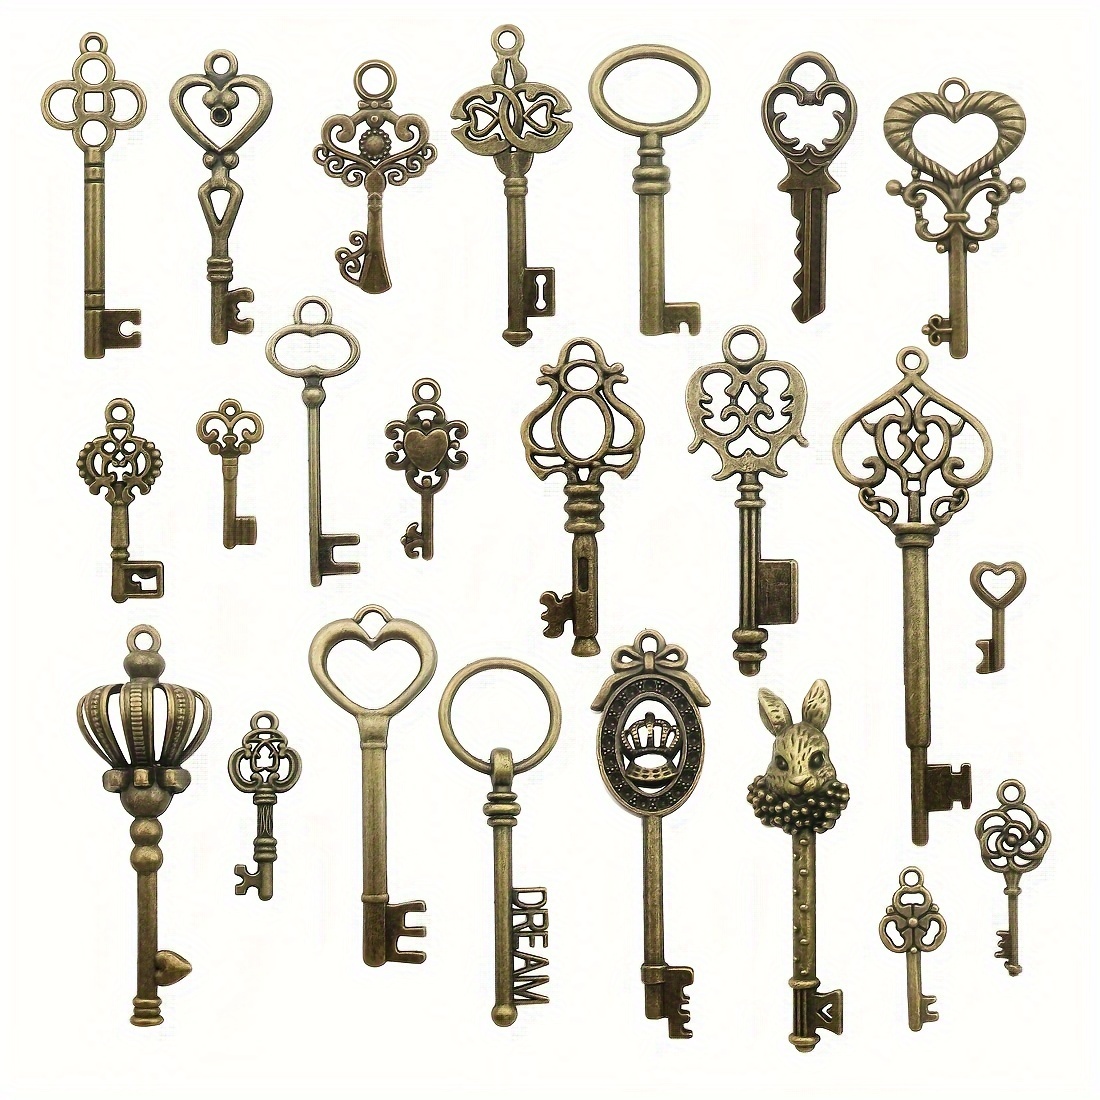 

46pcs Mix Vintage Skeleton Keys Pendants, Filigree Steampunk Keys Antique Bronze Keys Charms Pendants, Jewelry Findings Making Accessory For Diy Necklace Bracelet